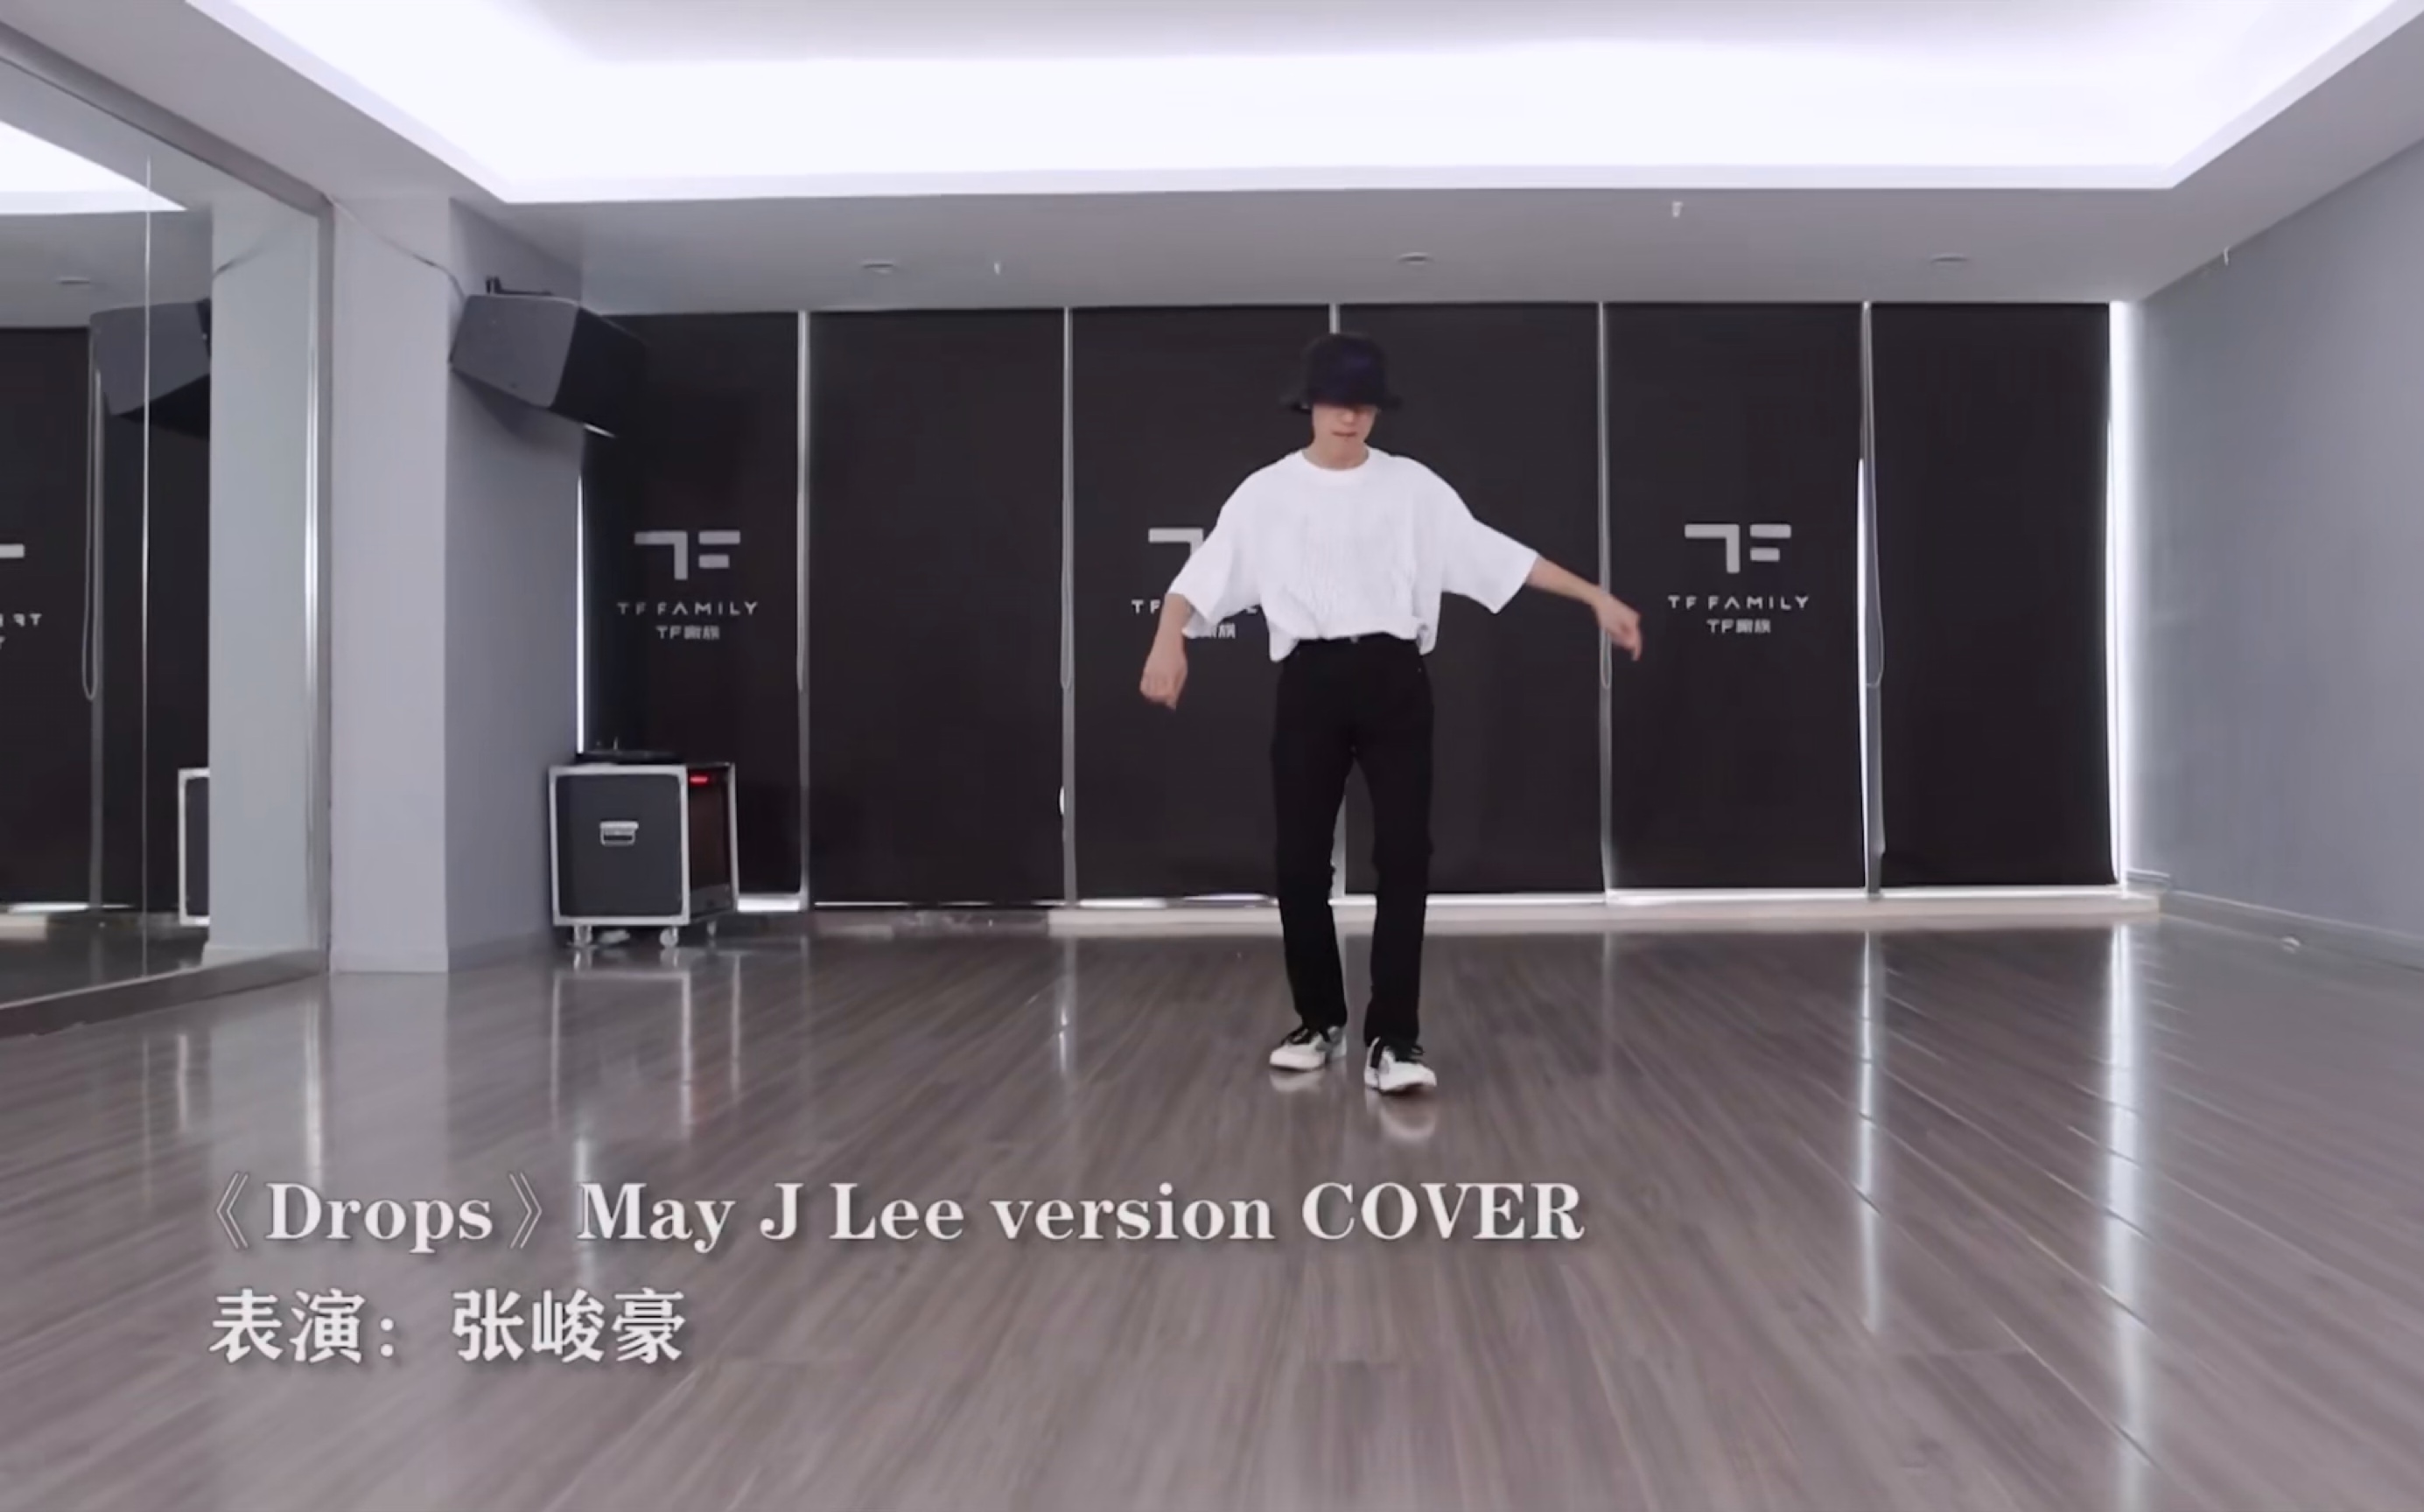 TF家族|张峻豪  Cover《Drops》——May J Lee version终于是拥有单人舞蹈cover的阿顺了！游刃舞担上线啦！